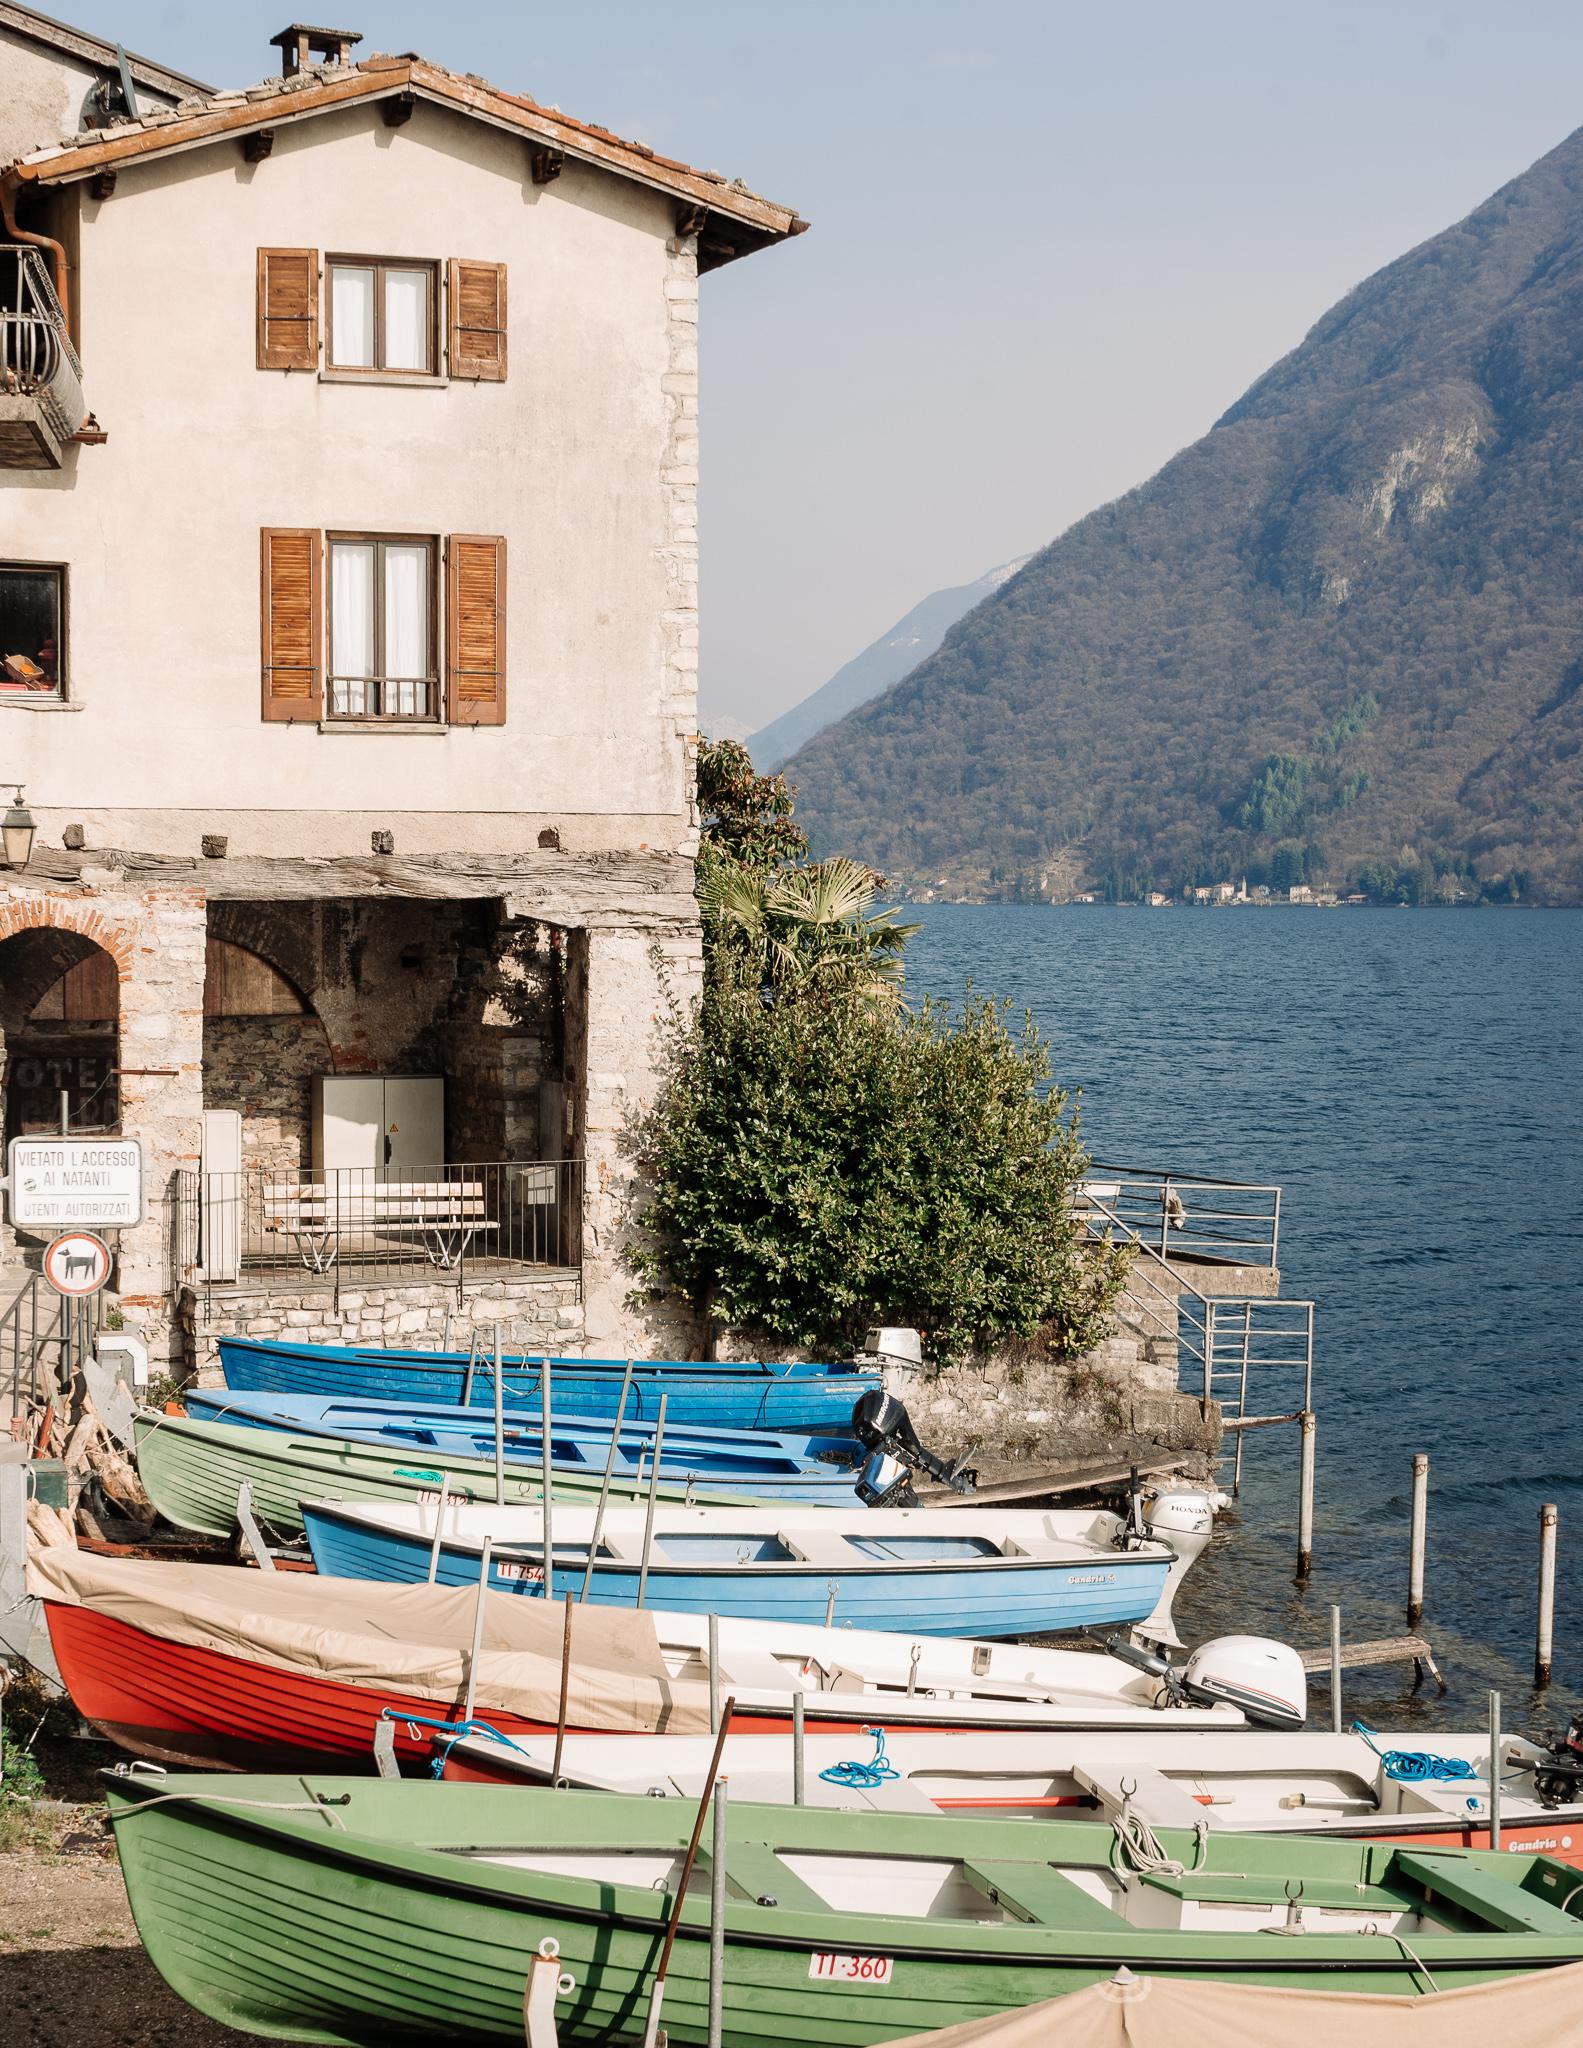 boats alongside Lugano lake in Gandria Ticino, Switzerland